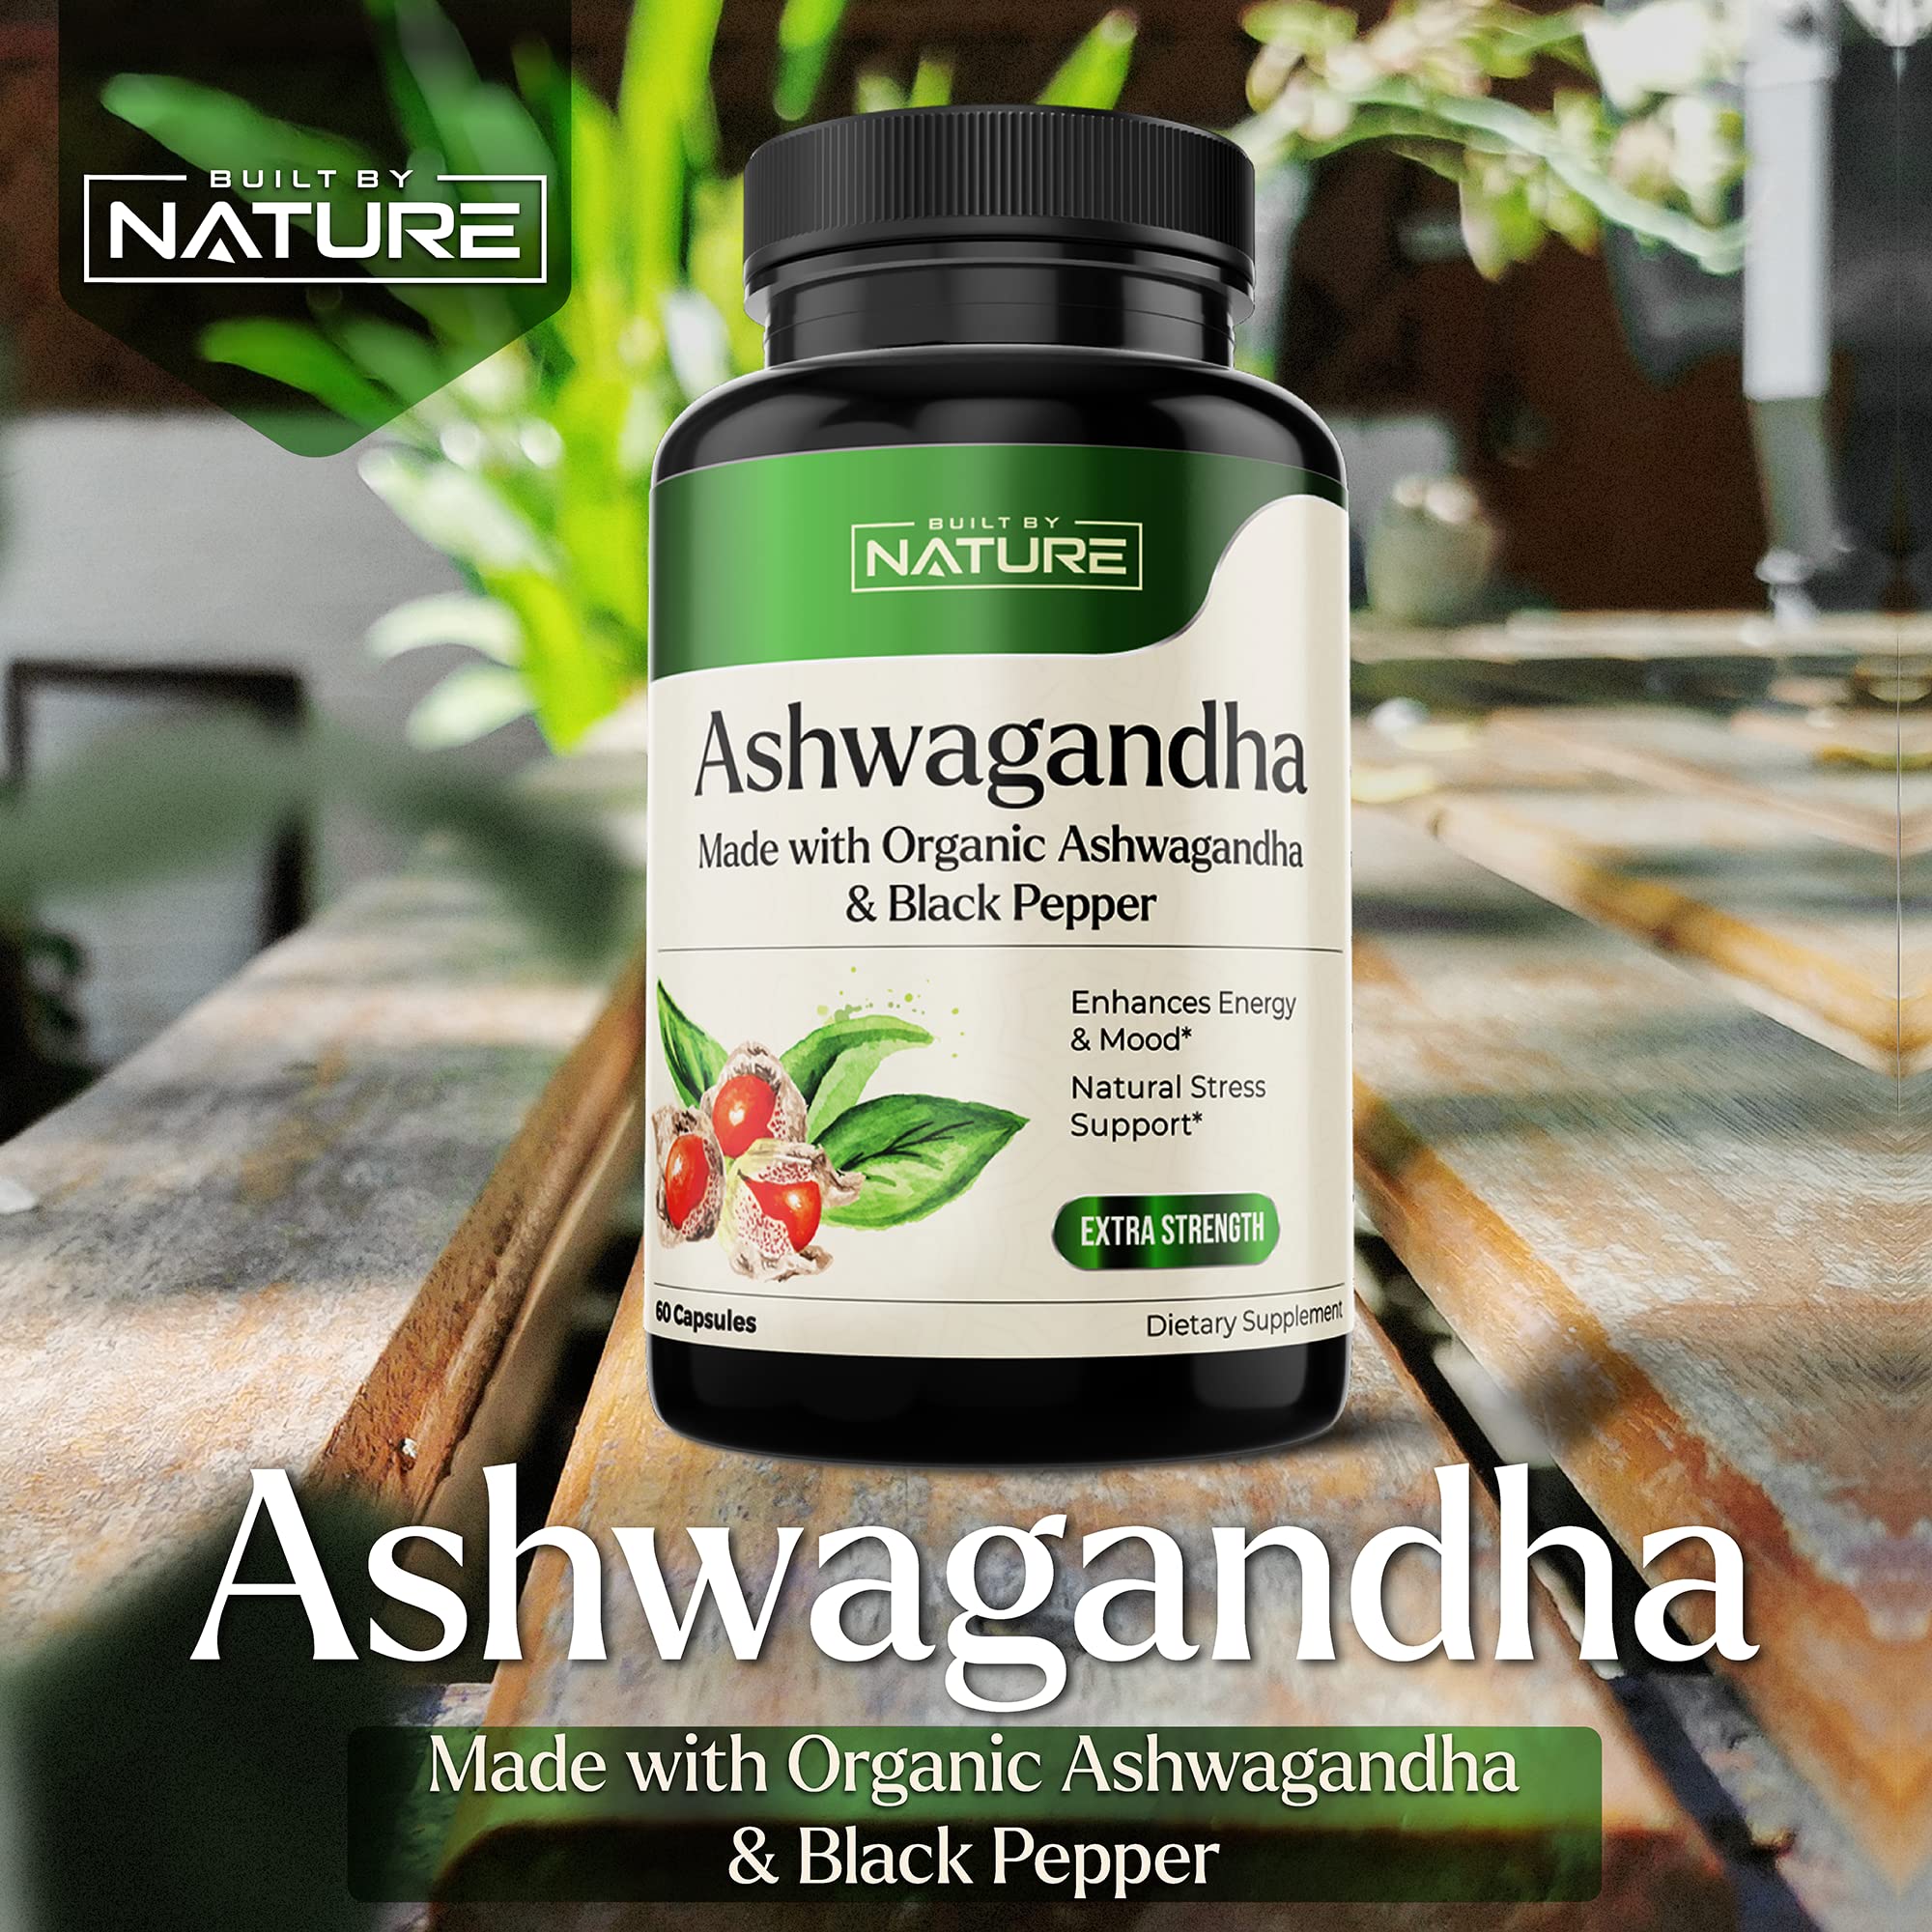 Ashwagandha with Black Pepper for Max Absorption - Pure Organic Ashwagandha Powder Supplement, Non-GMO, Gluten-Free & Gelatin Free - Stress, Mood, Focus, Immune & Thyroid Support - 60 Vegan Capsules